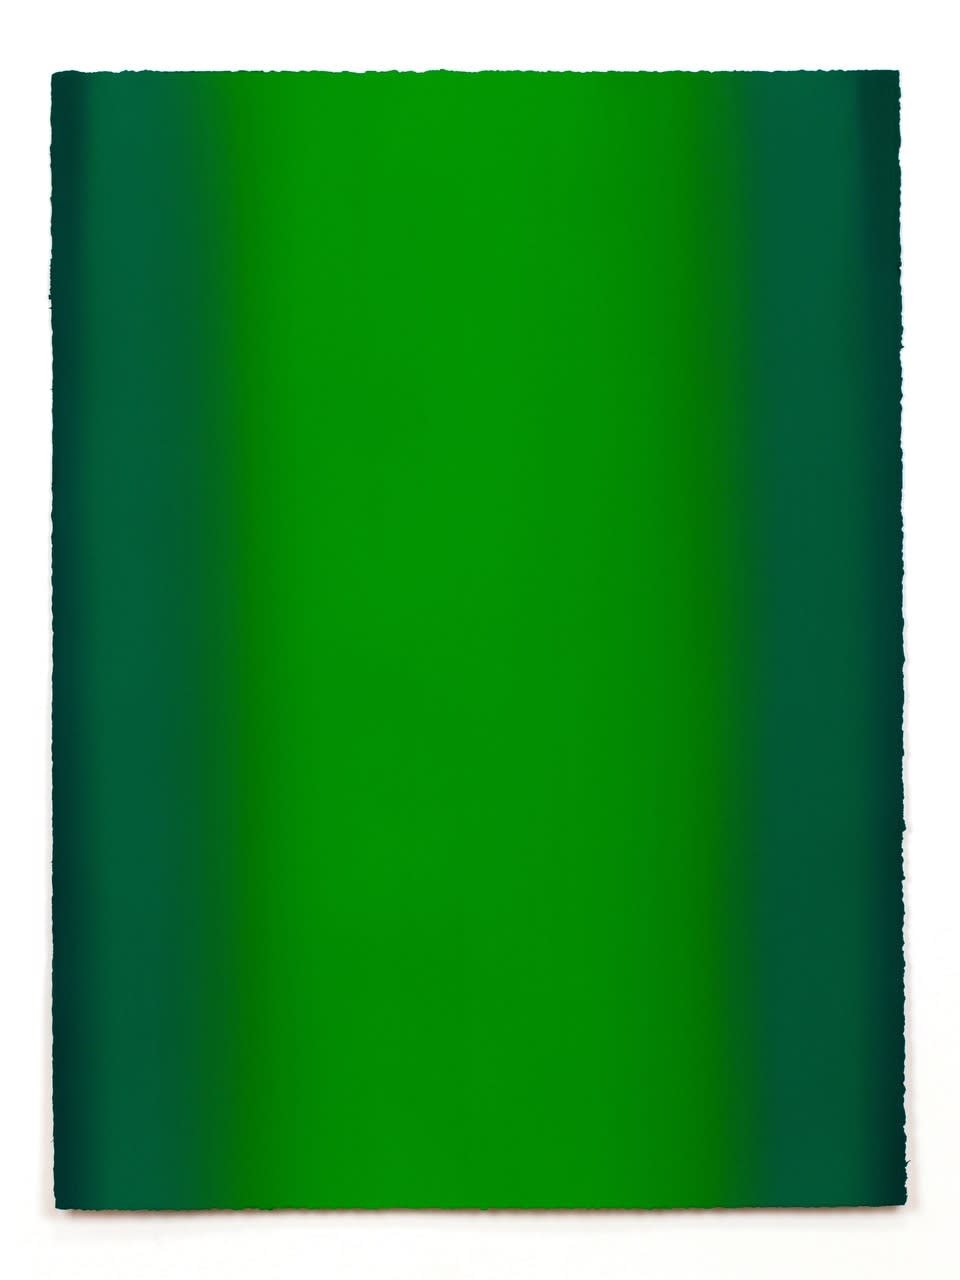 Ruth Pastine, Green 2, Depth Series, 2020